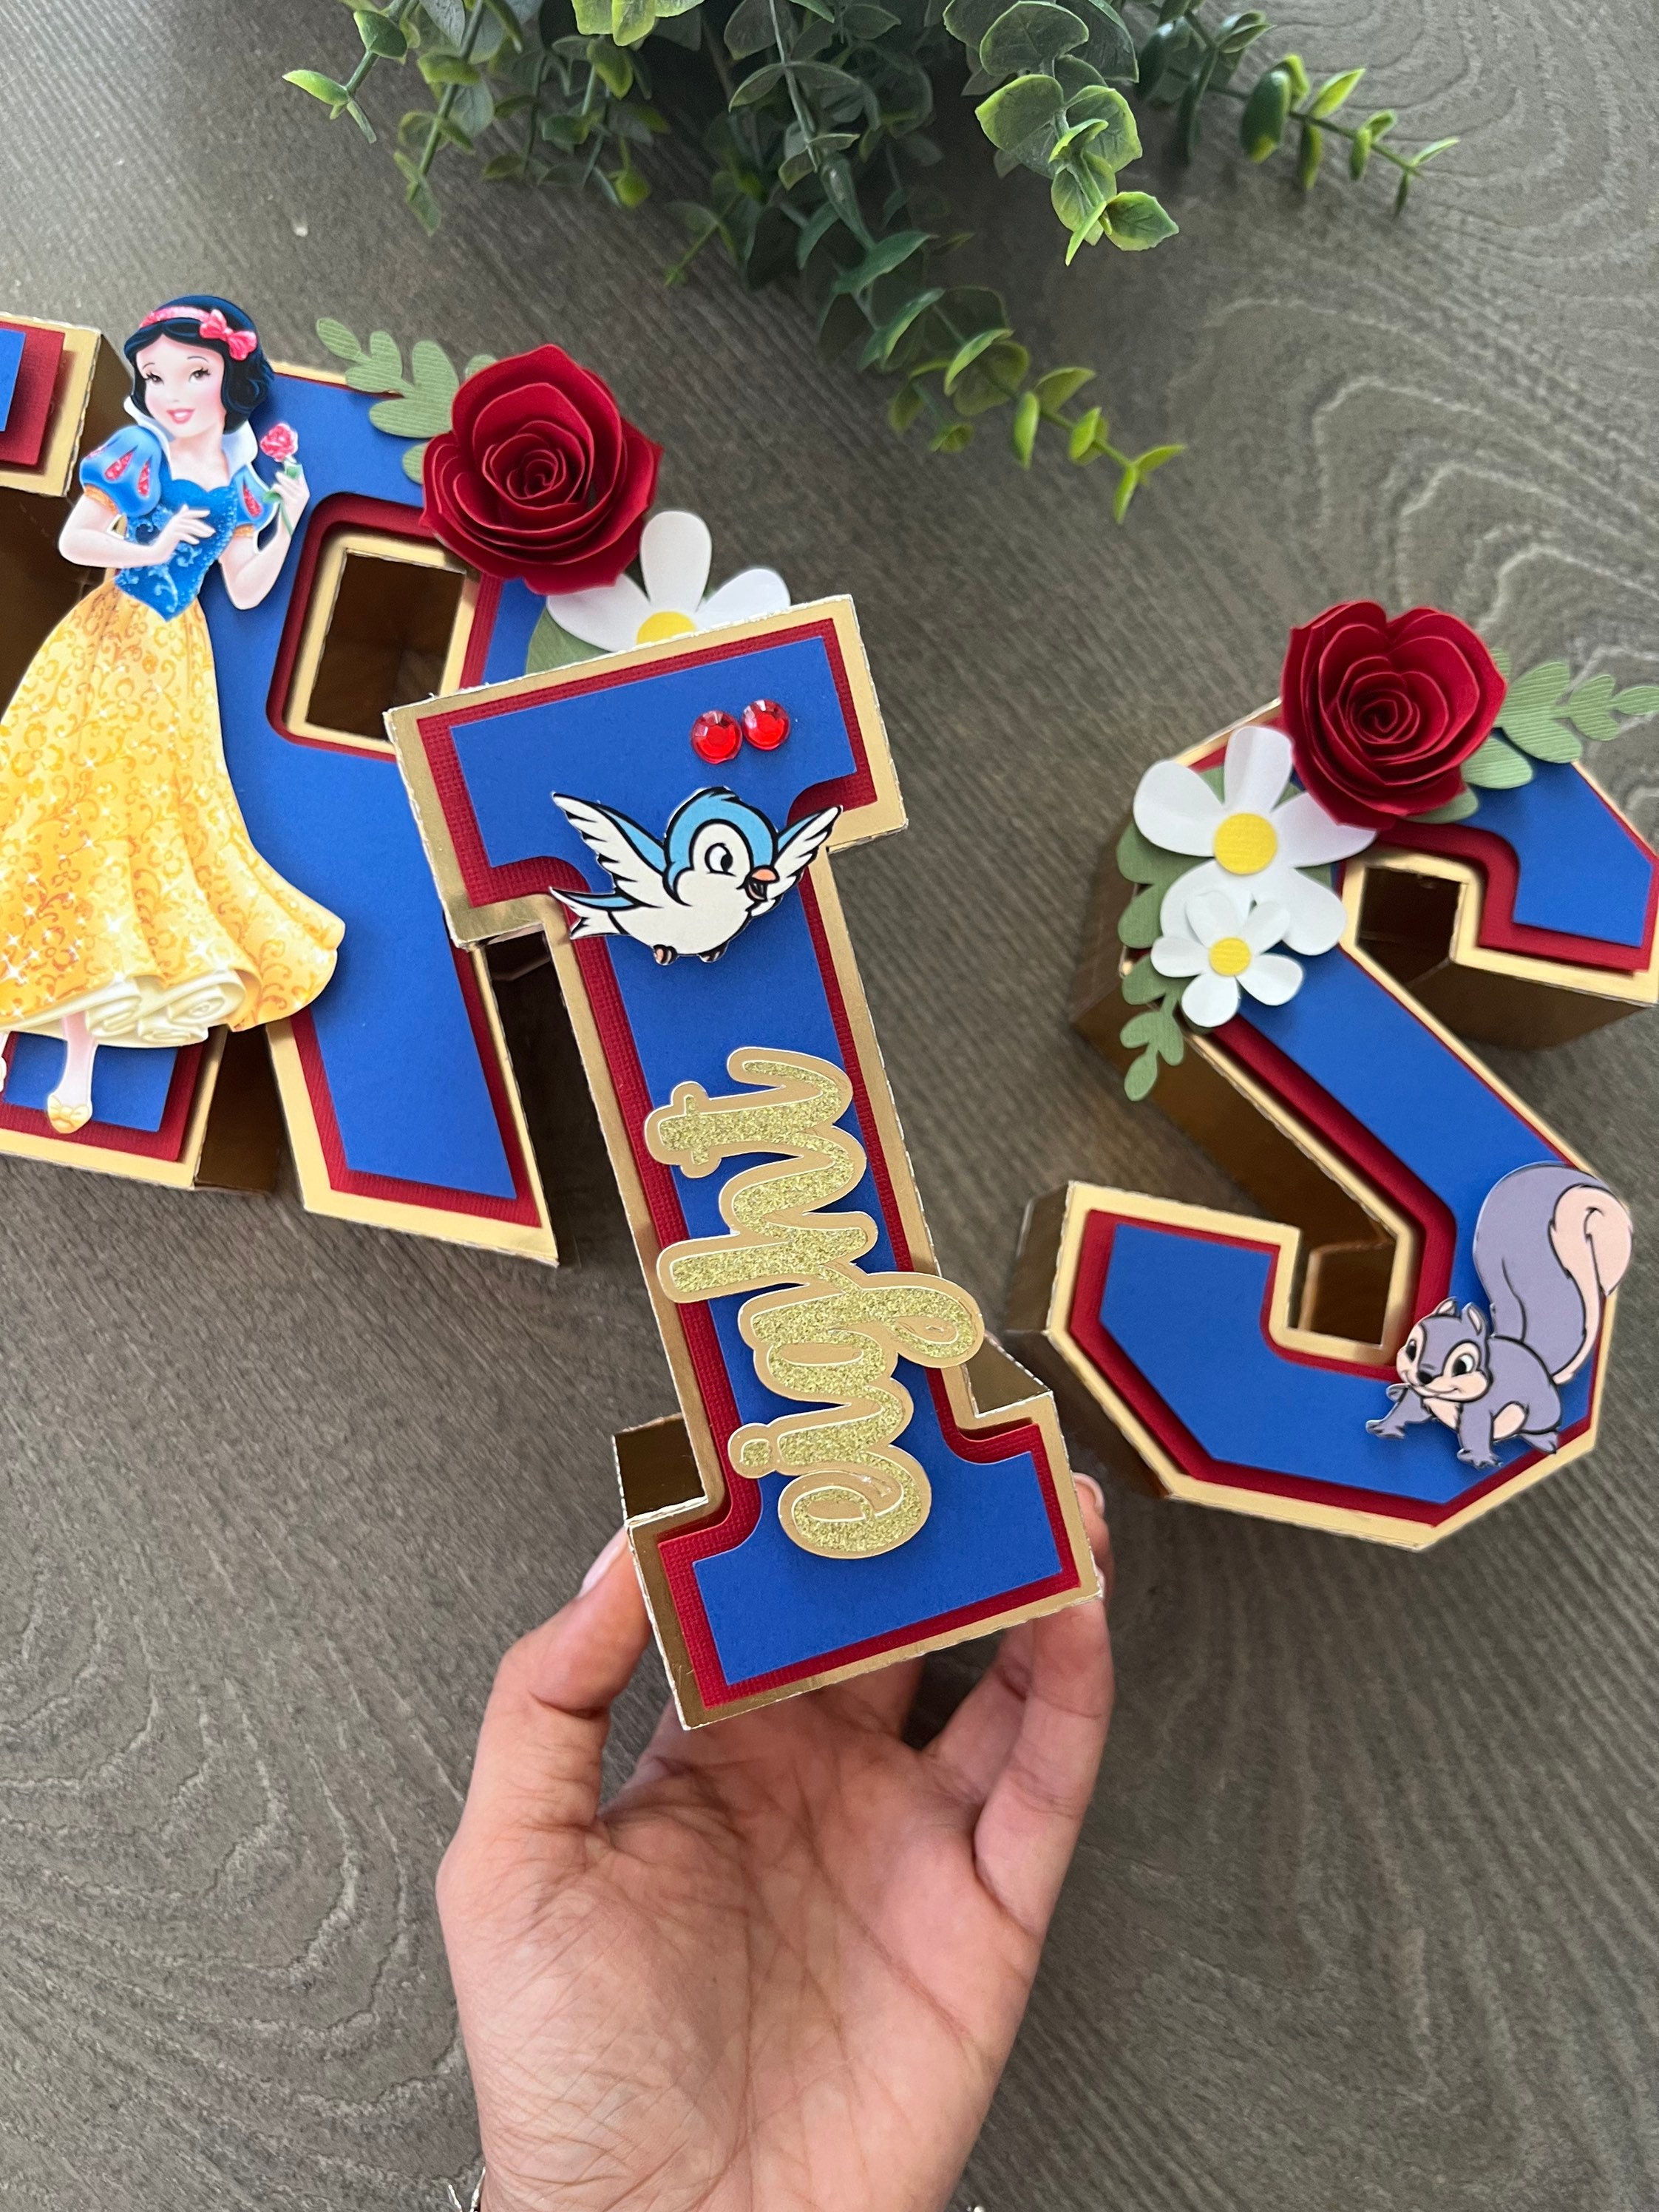 Snow White Party Decorations, Snow White 3d Letter, Snow White